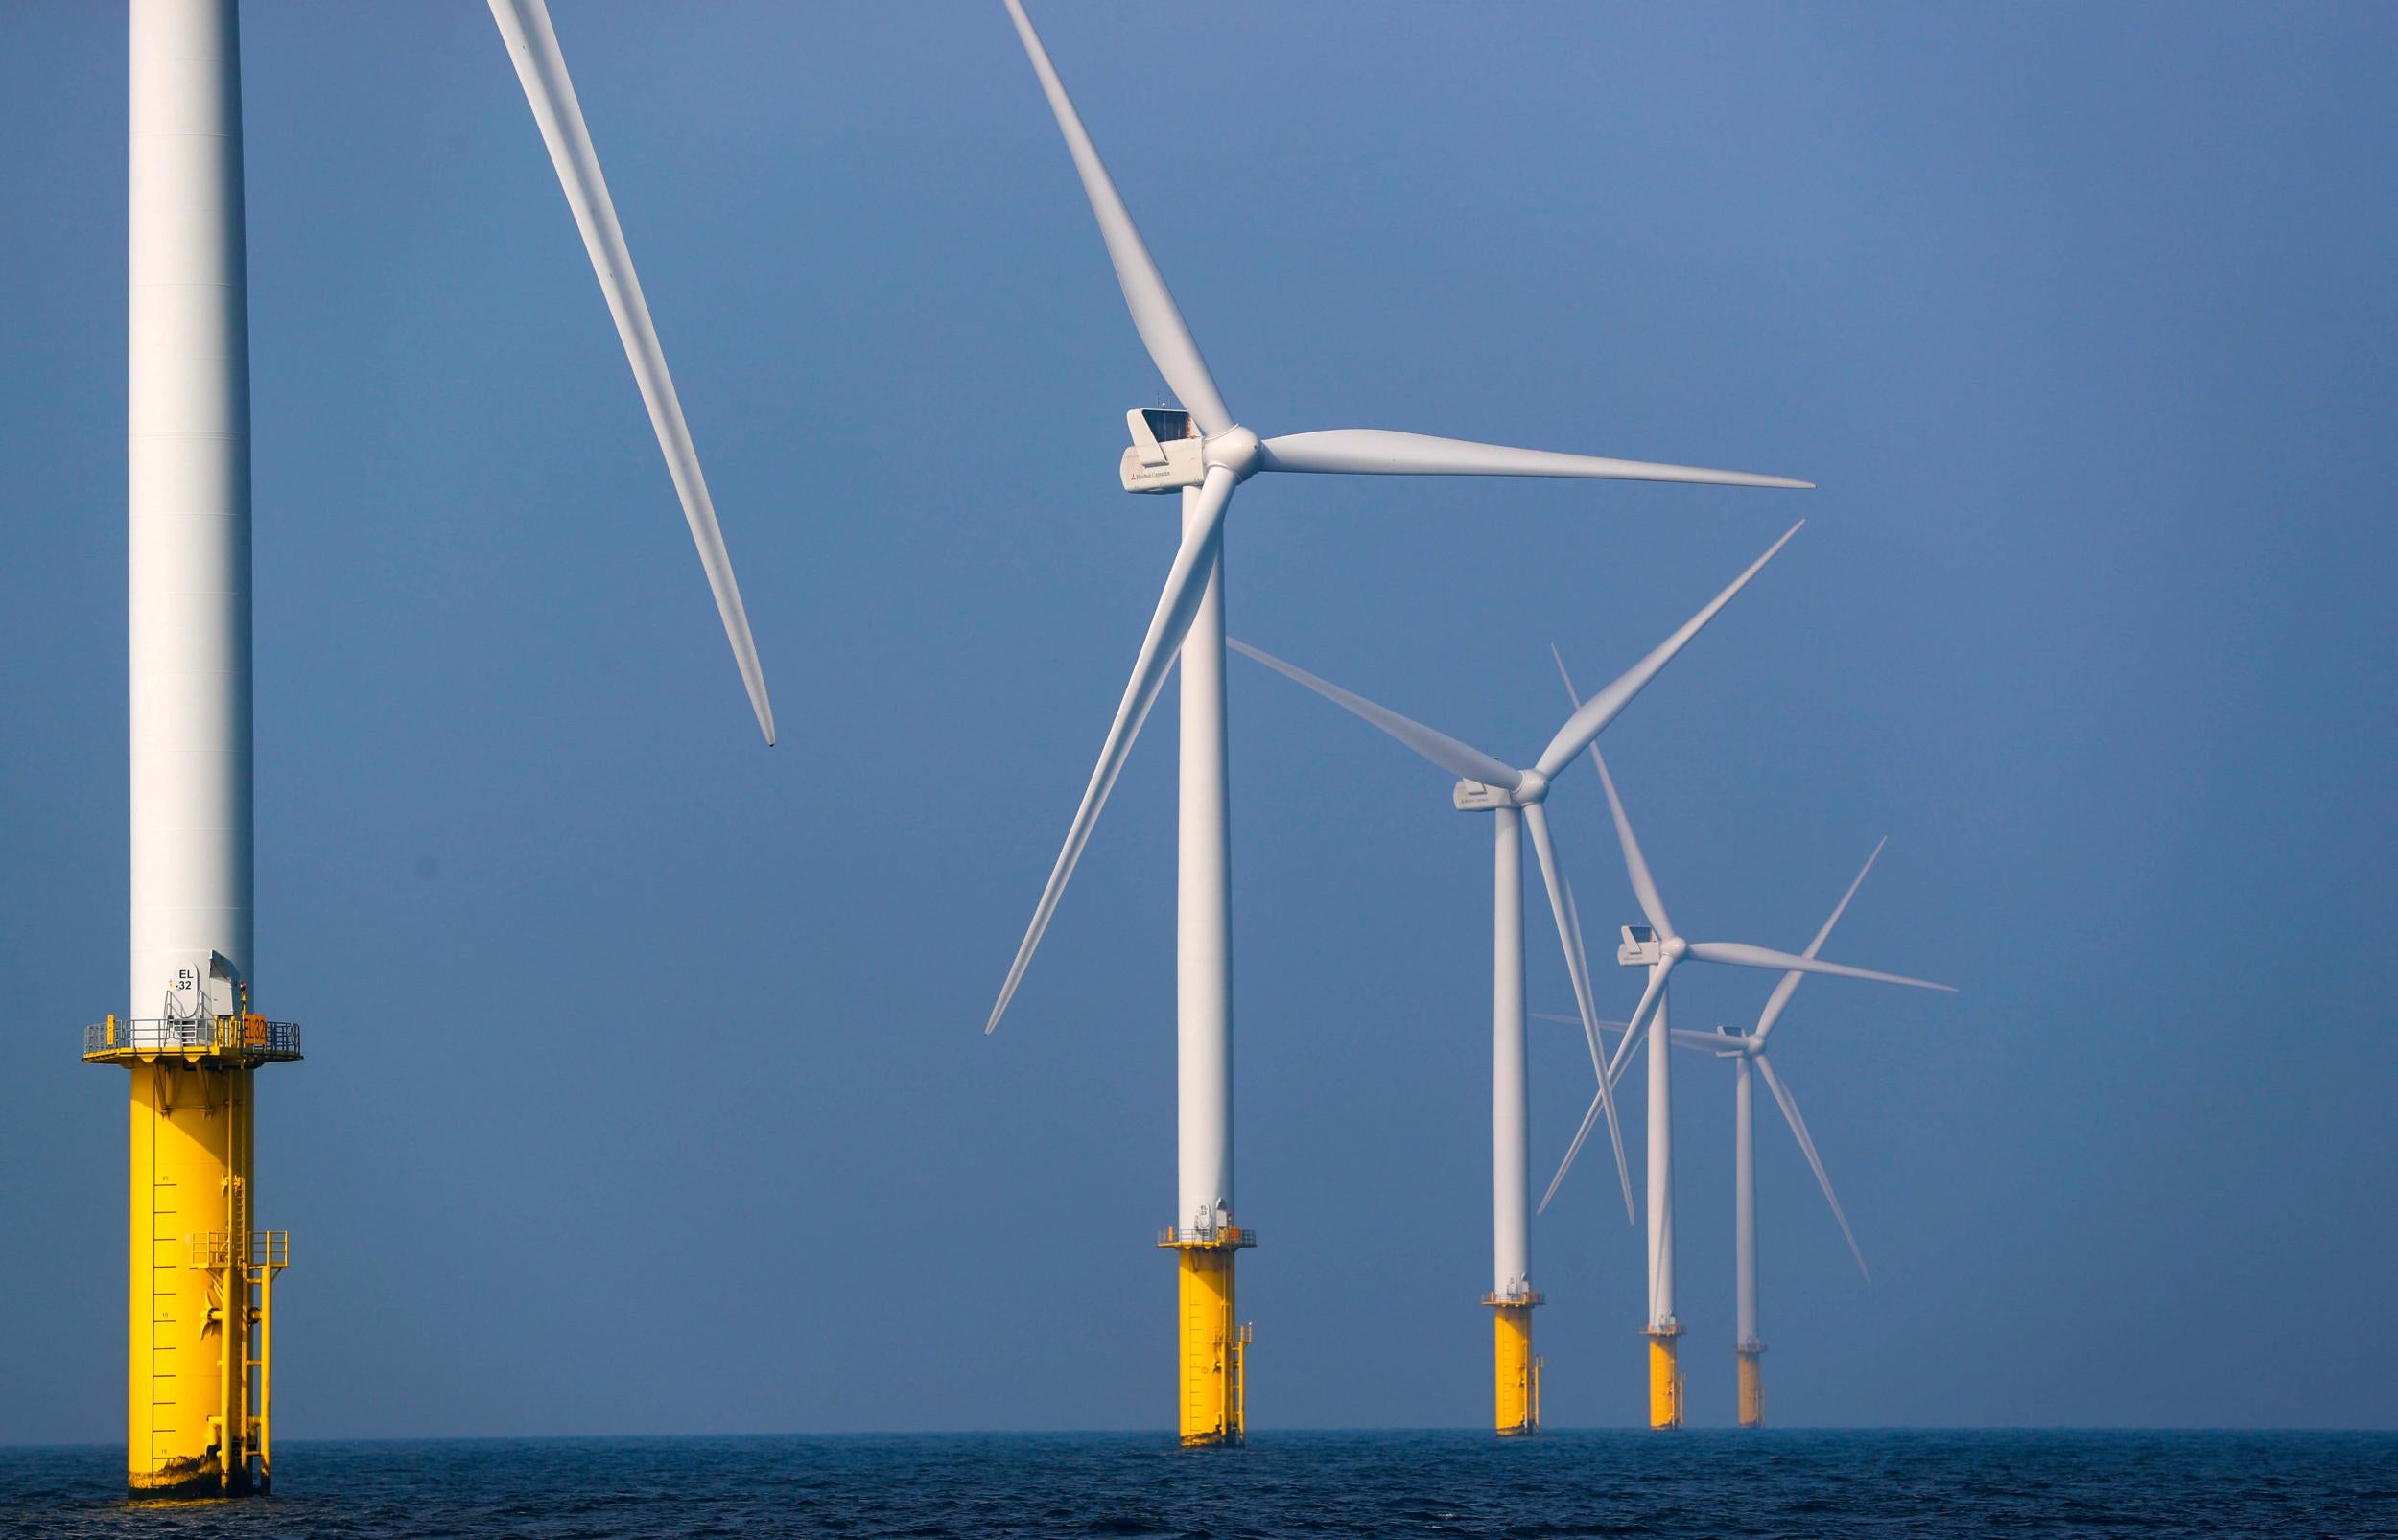 Energy firm Eneco has offshore wind turbines across the Netherlands